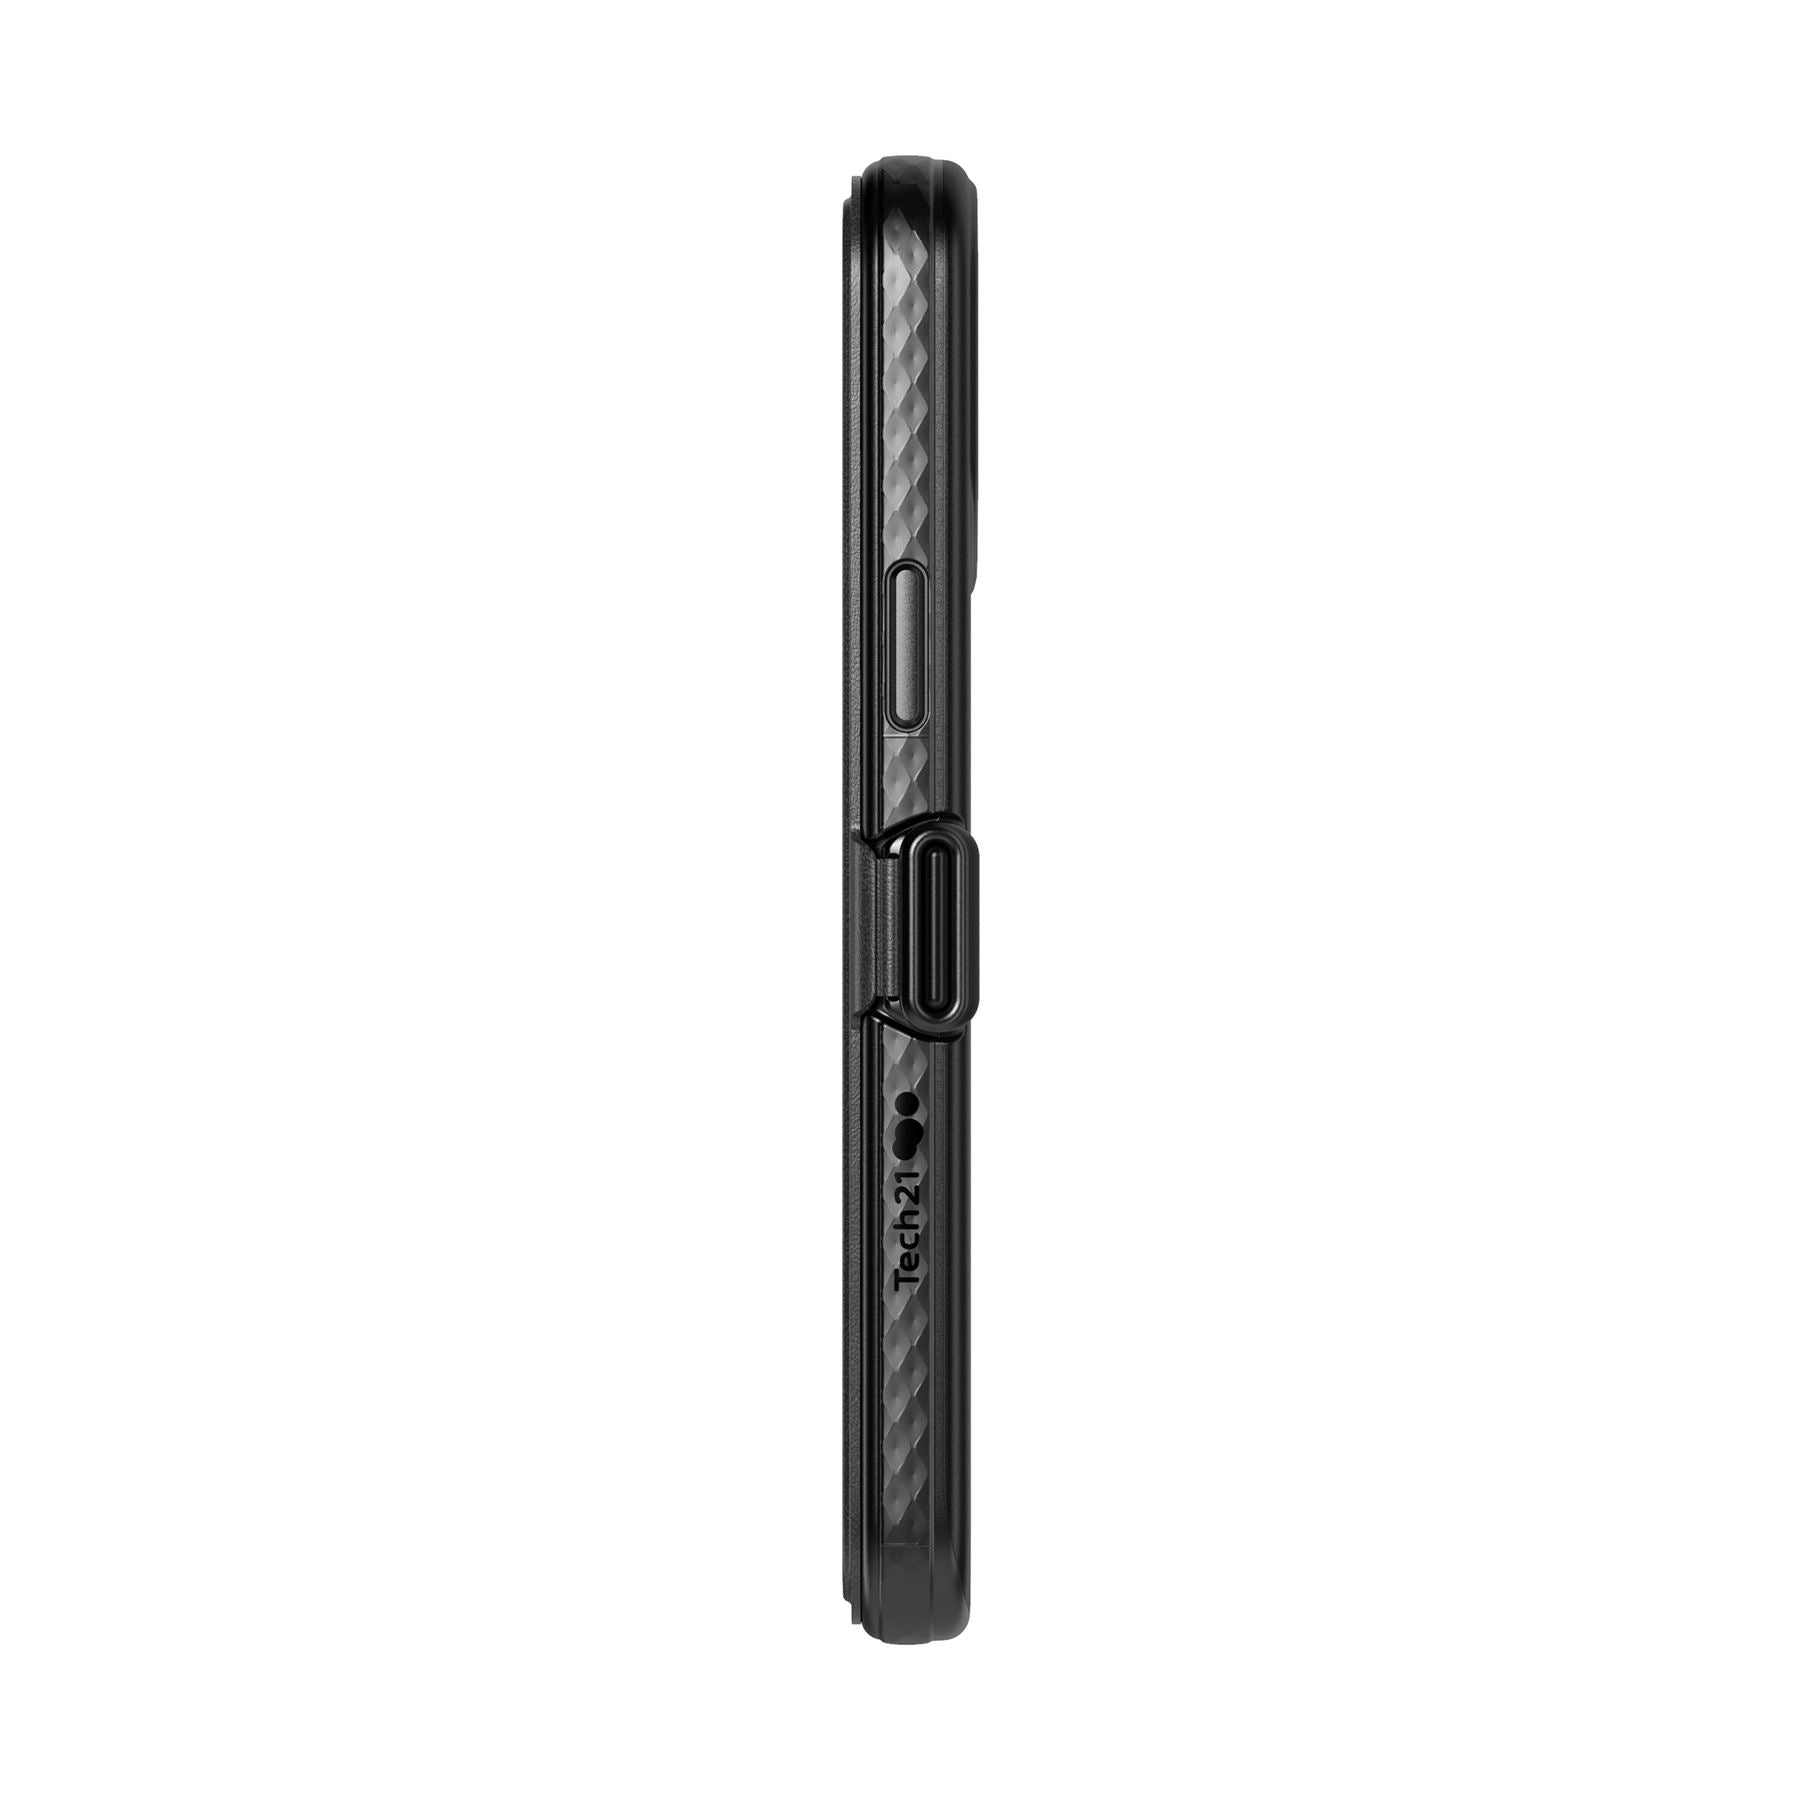 Evo Wallet - Apple iPhone 13 Pro Max Case - Black